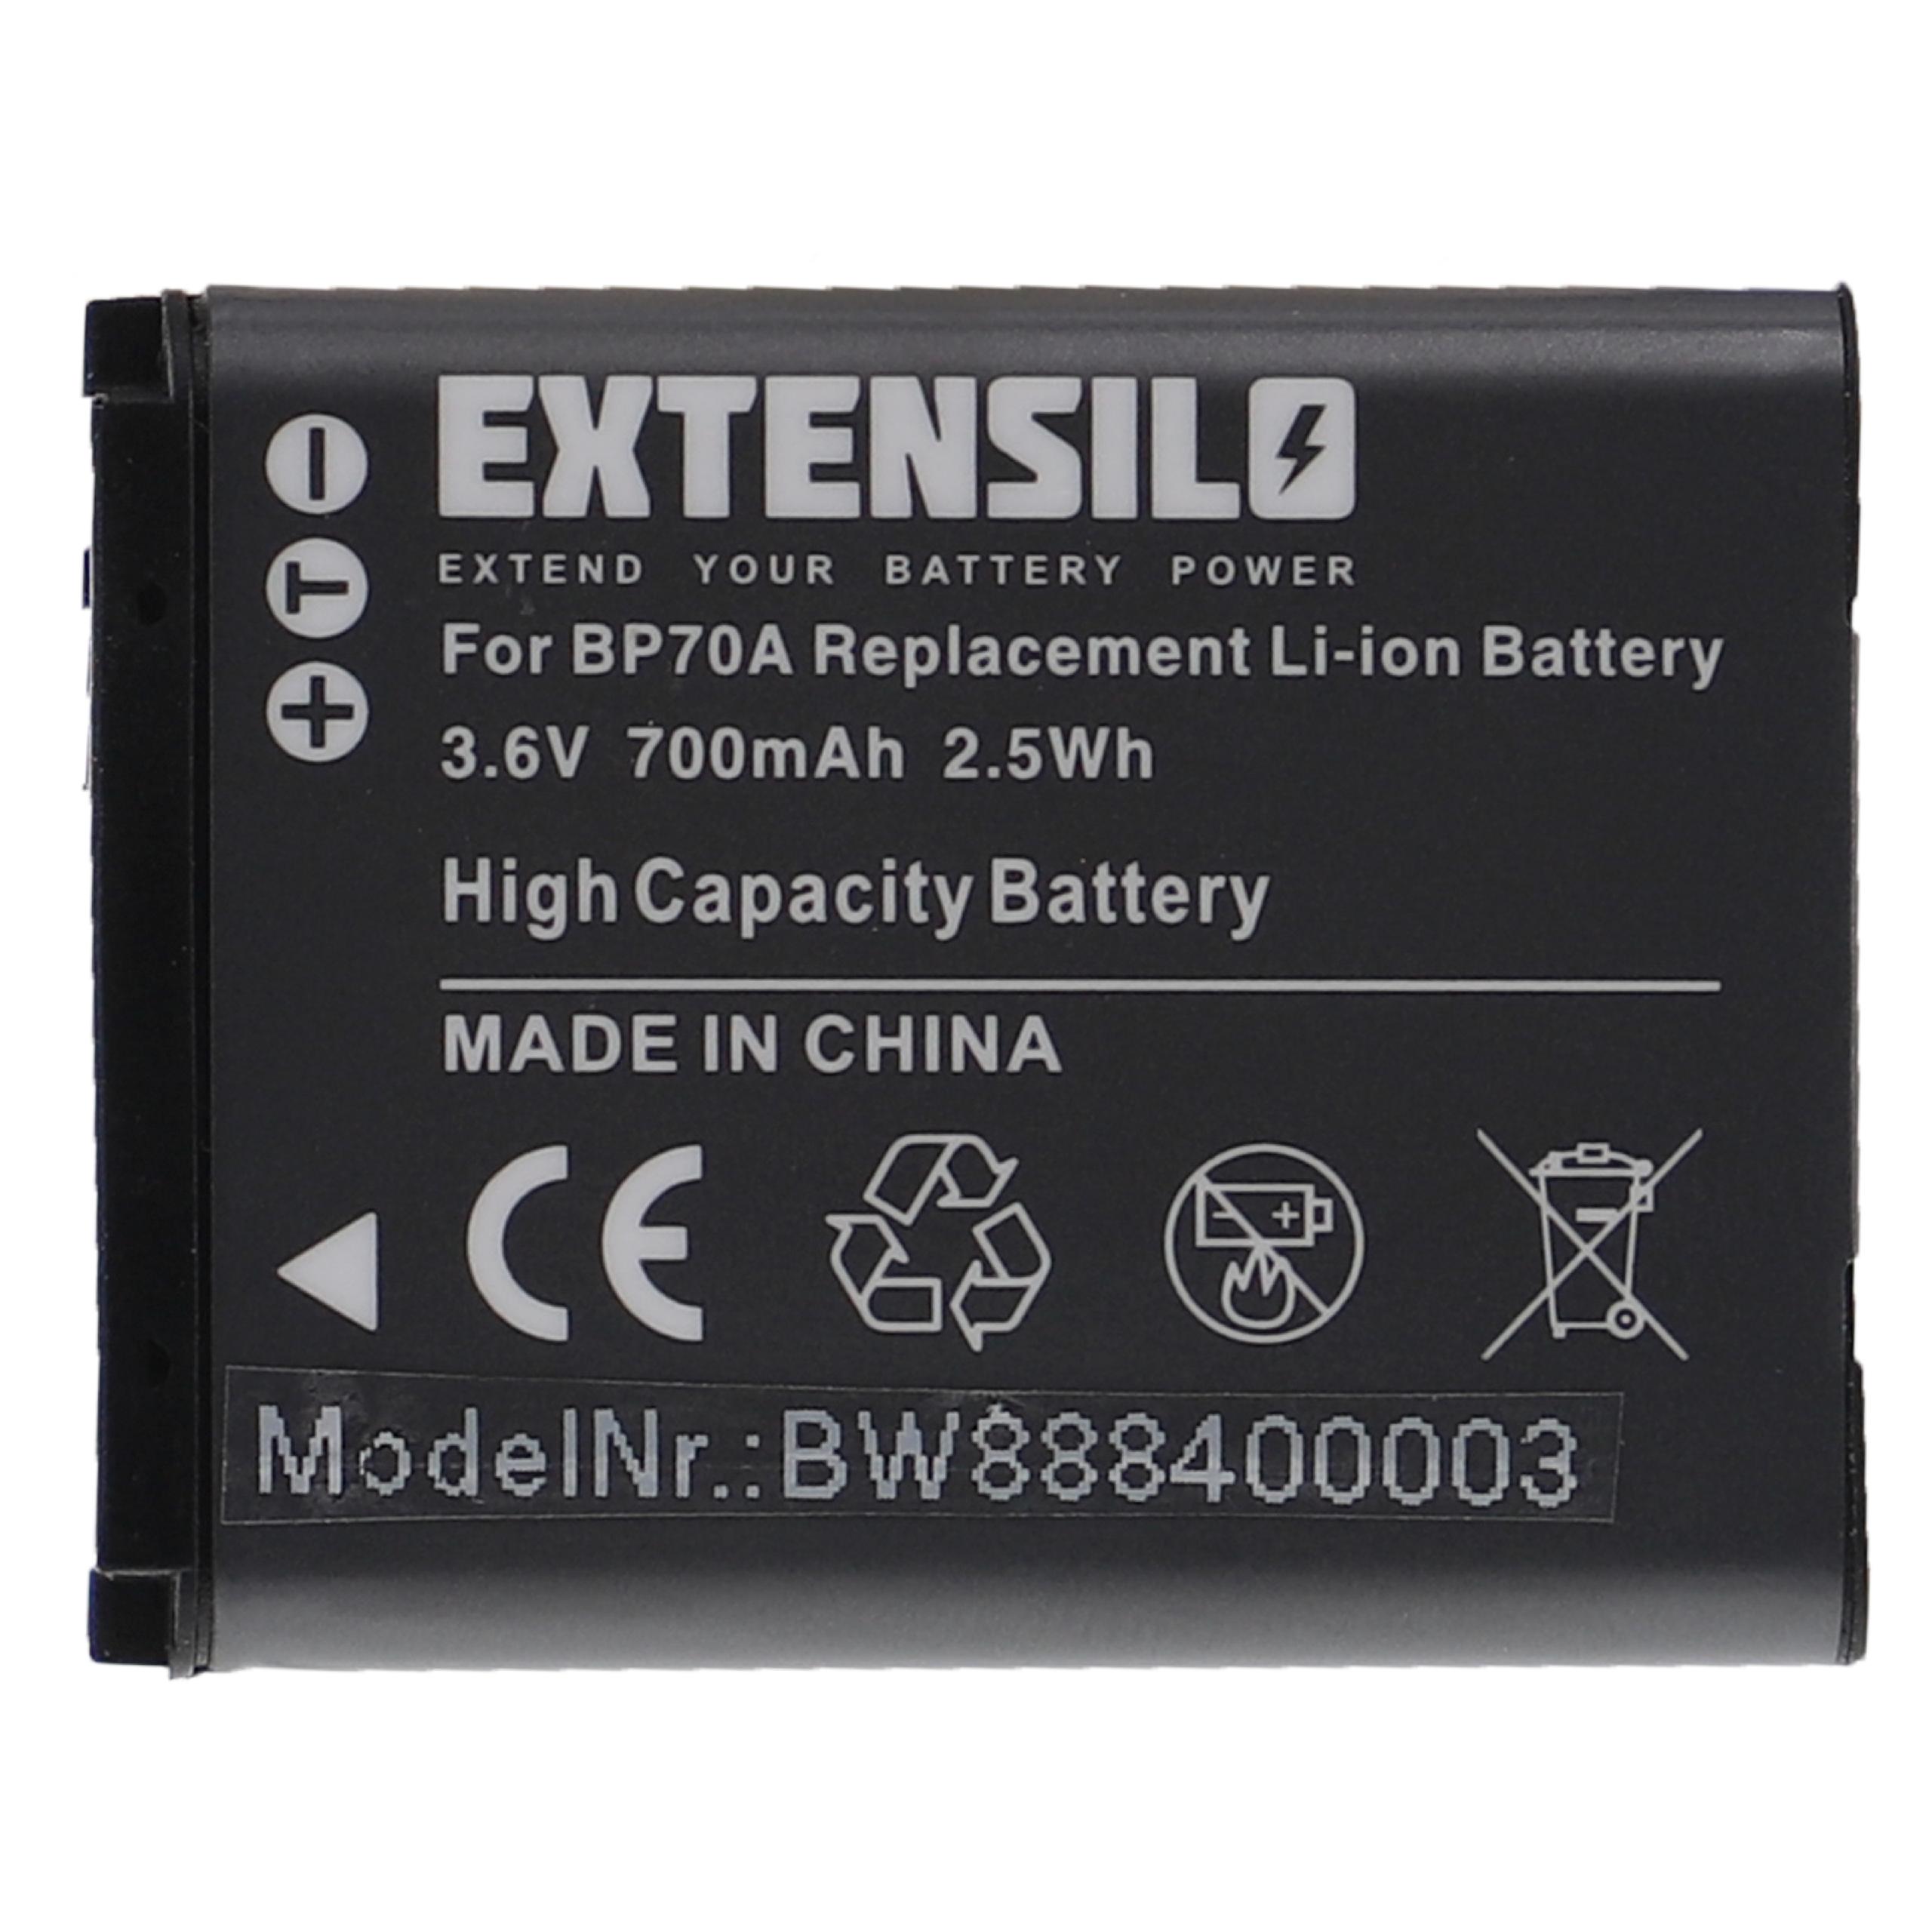 Akumulator do aparatu cyfrowego zamiennik Samsung BP-70a, SLB-70A, BP70a, EA-BP70A - 700 mAh 3,6 V Li-Ion